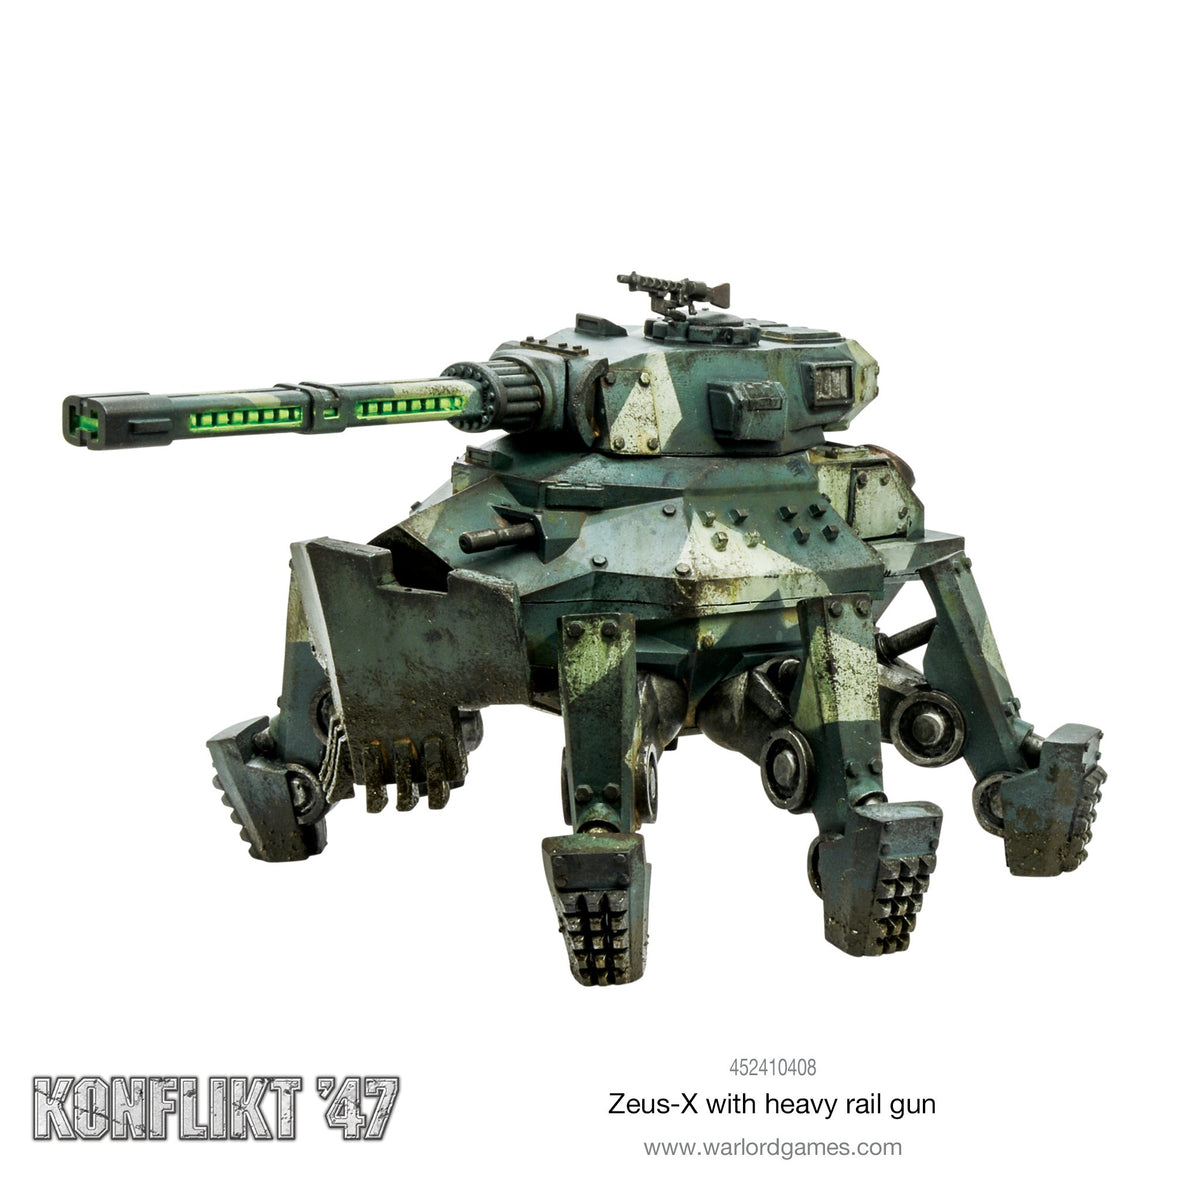 Zeus-X with heavy rail gun